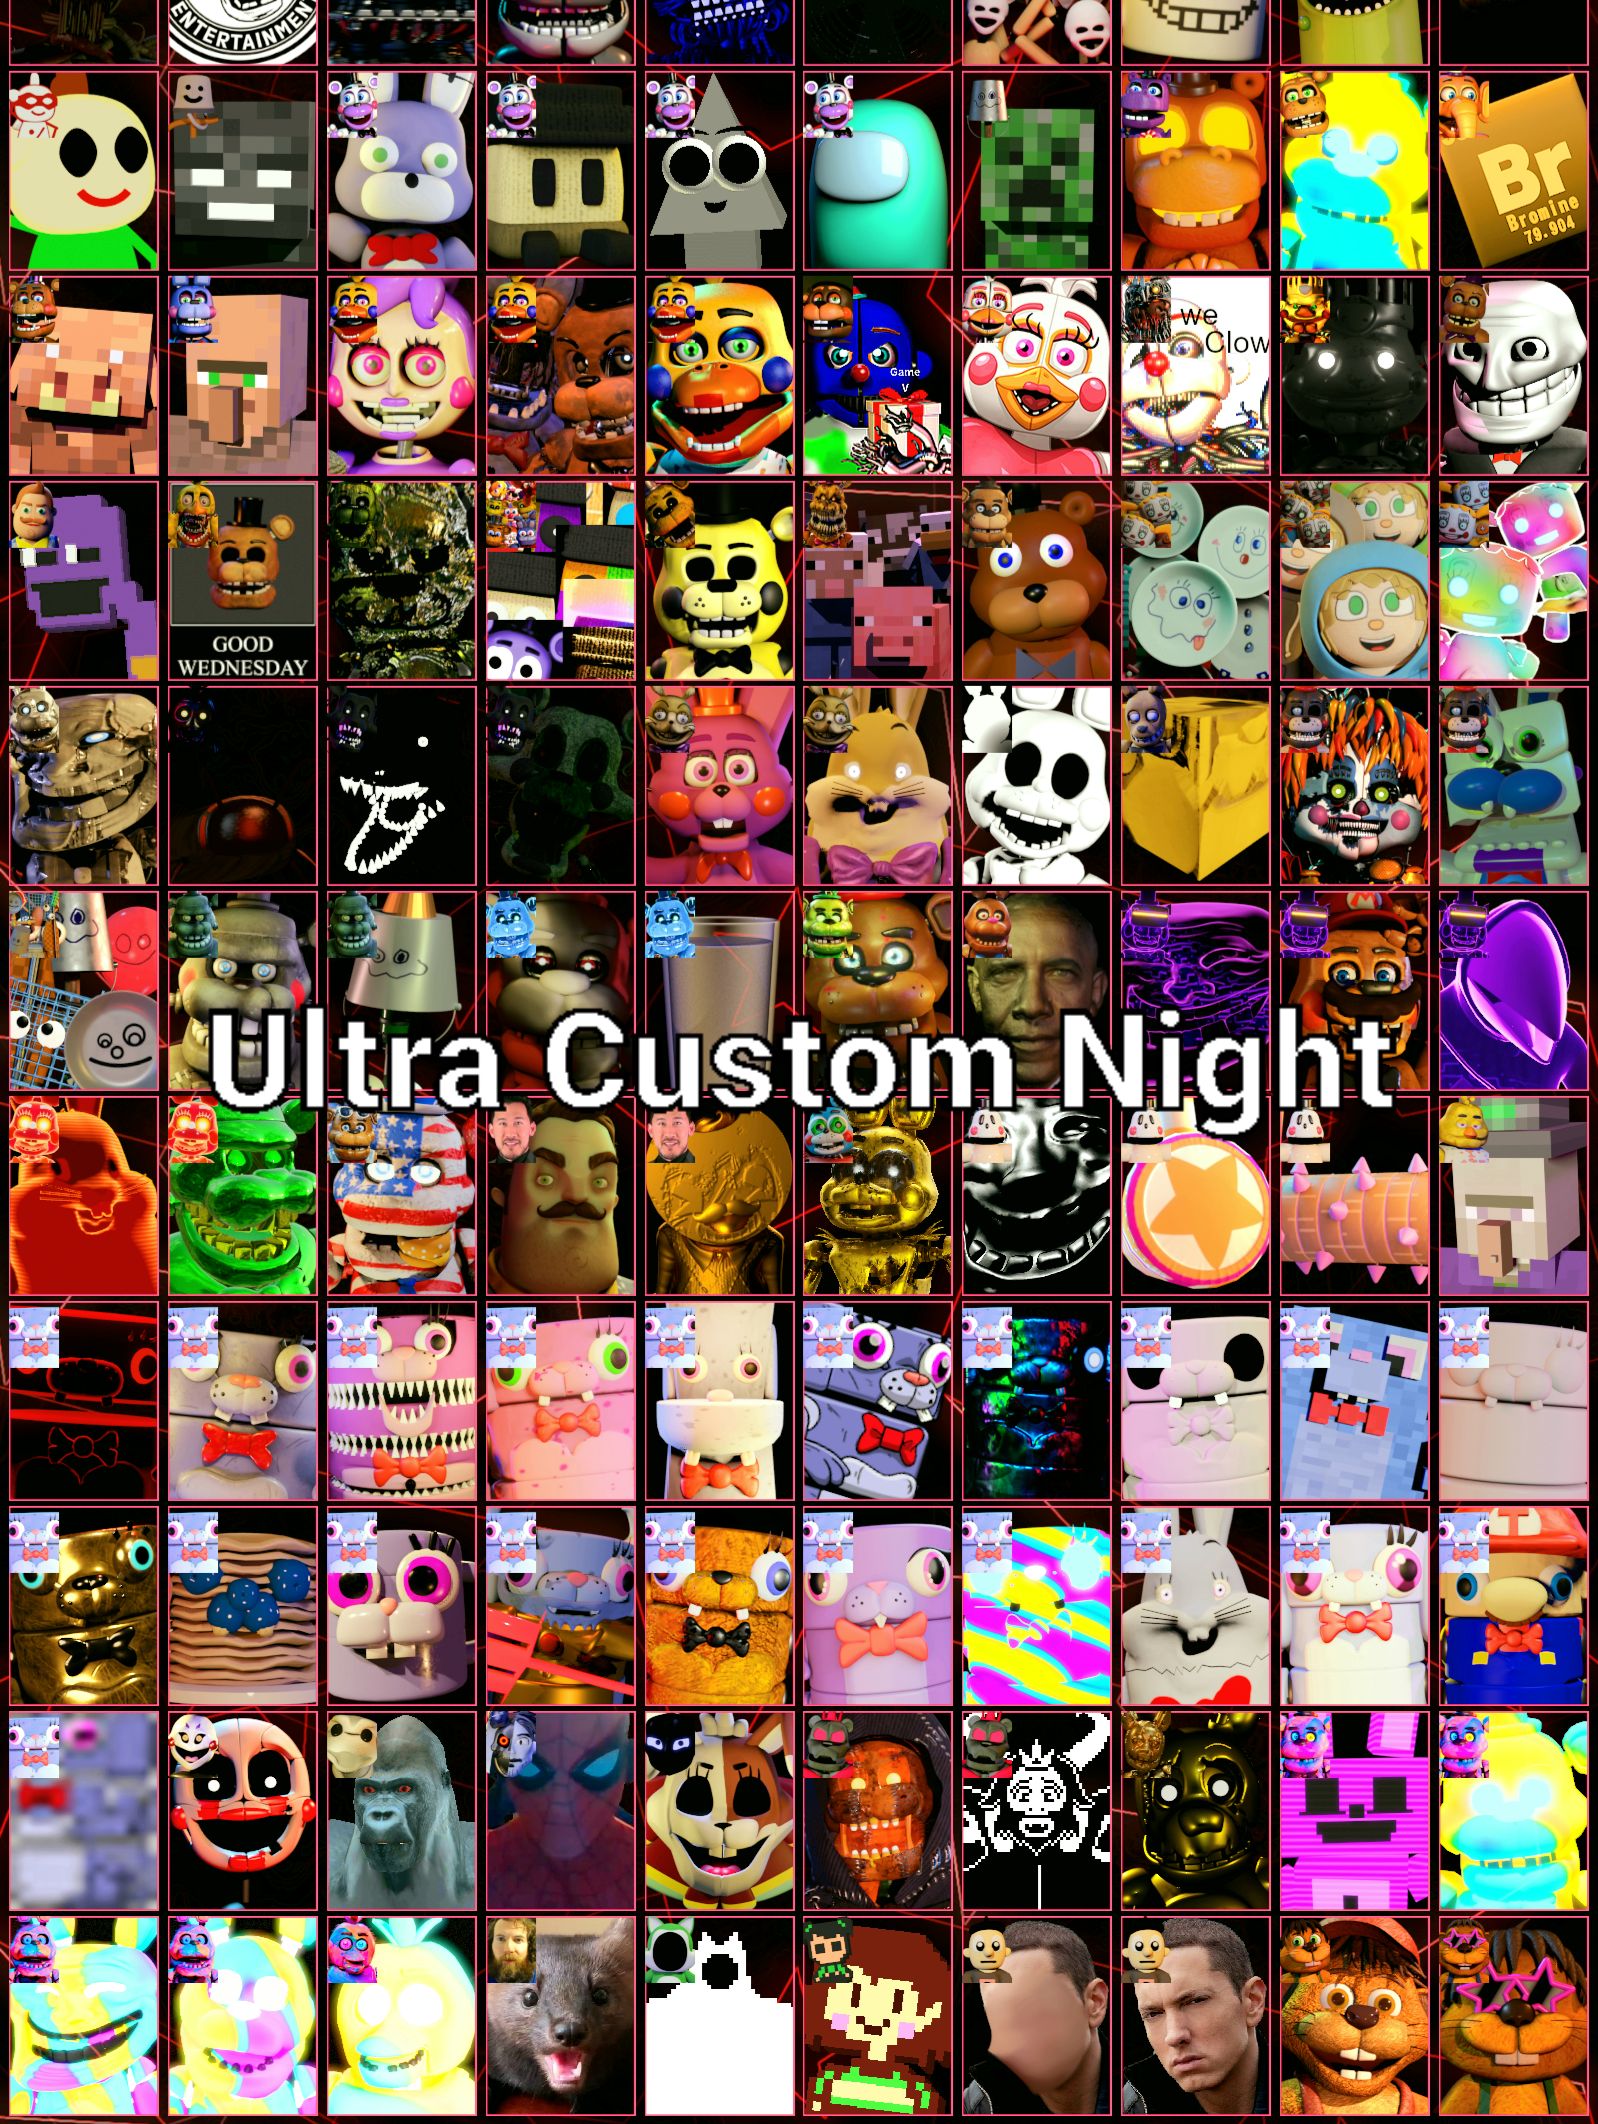 Five Nights at Freddy's 2 Ultra Custom Night 